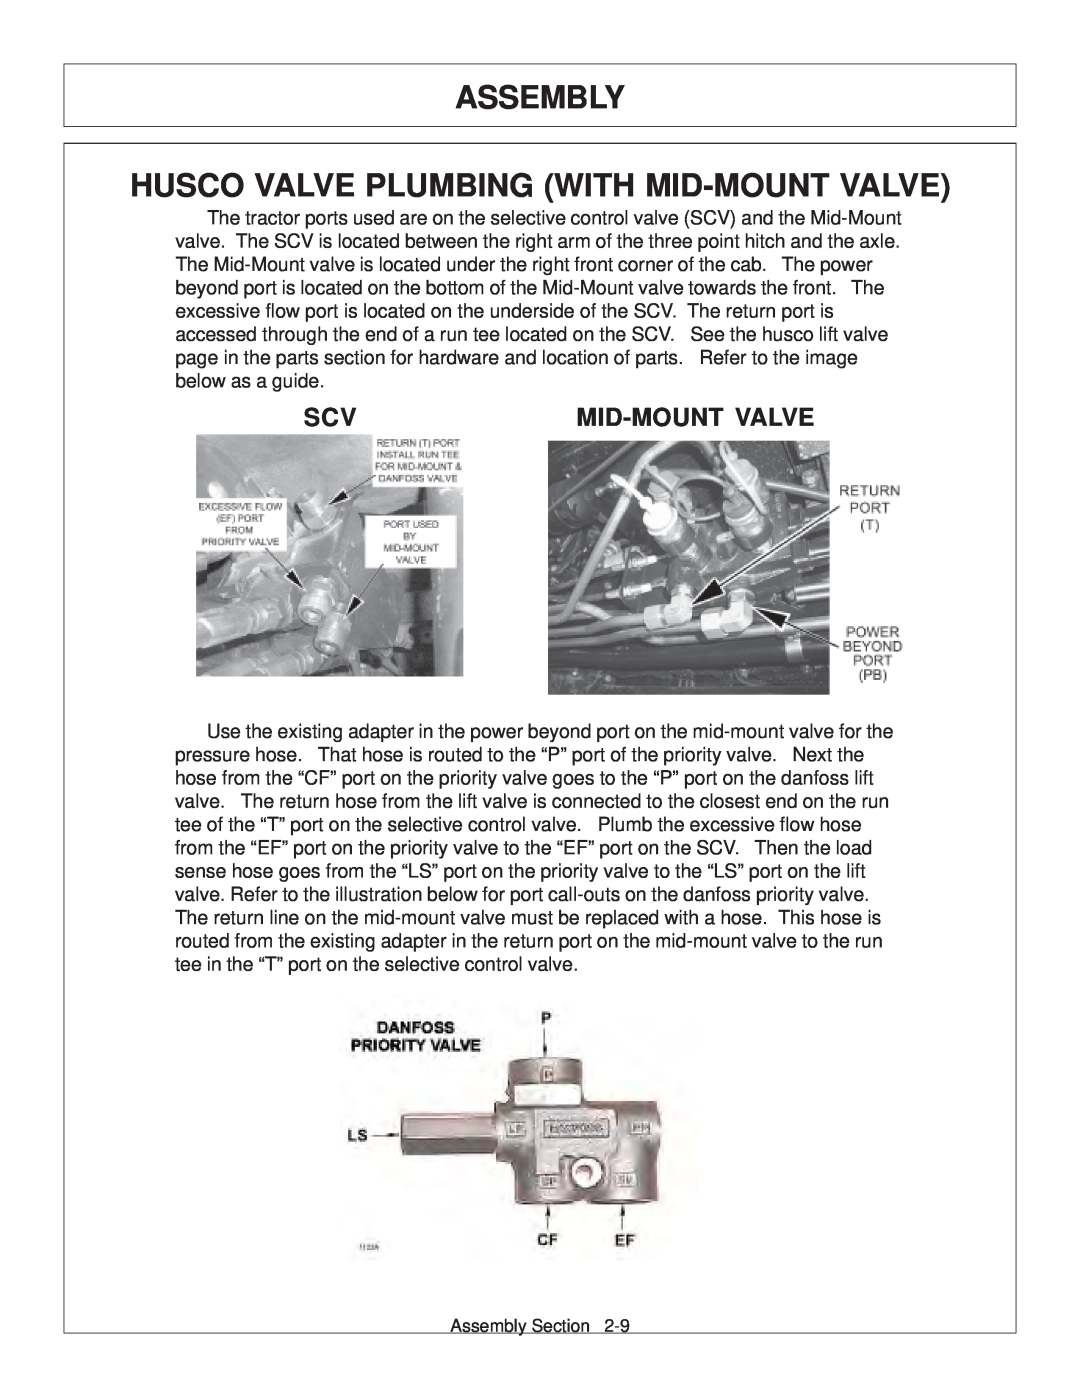 Tiger JD 5083E, JD 5101E, JD 5093E manual Assembly Husco Valve Plumbing With Mid-Mount Valve 